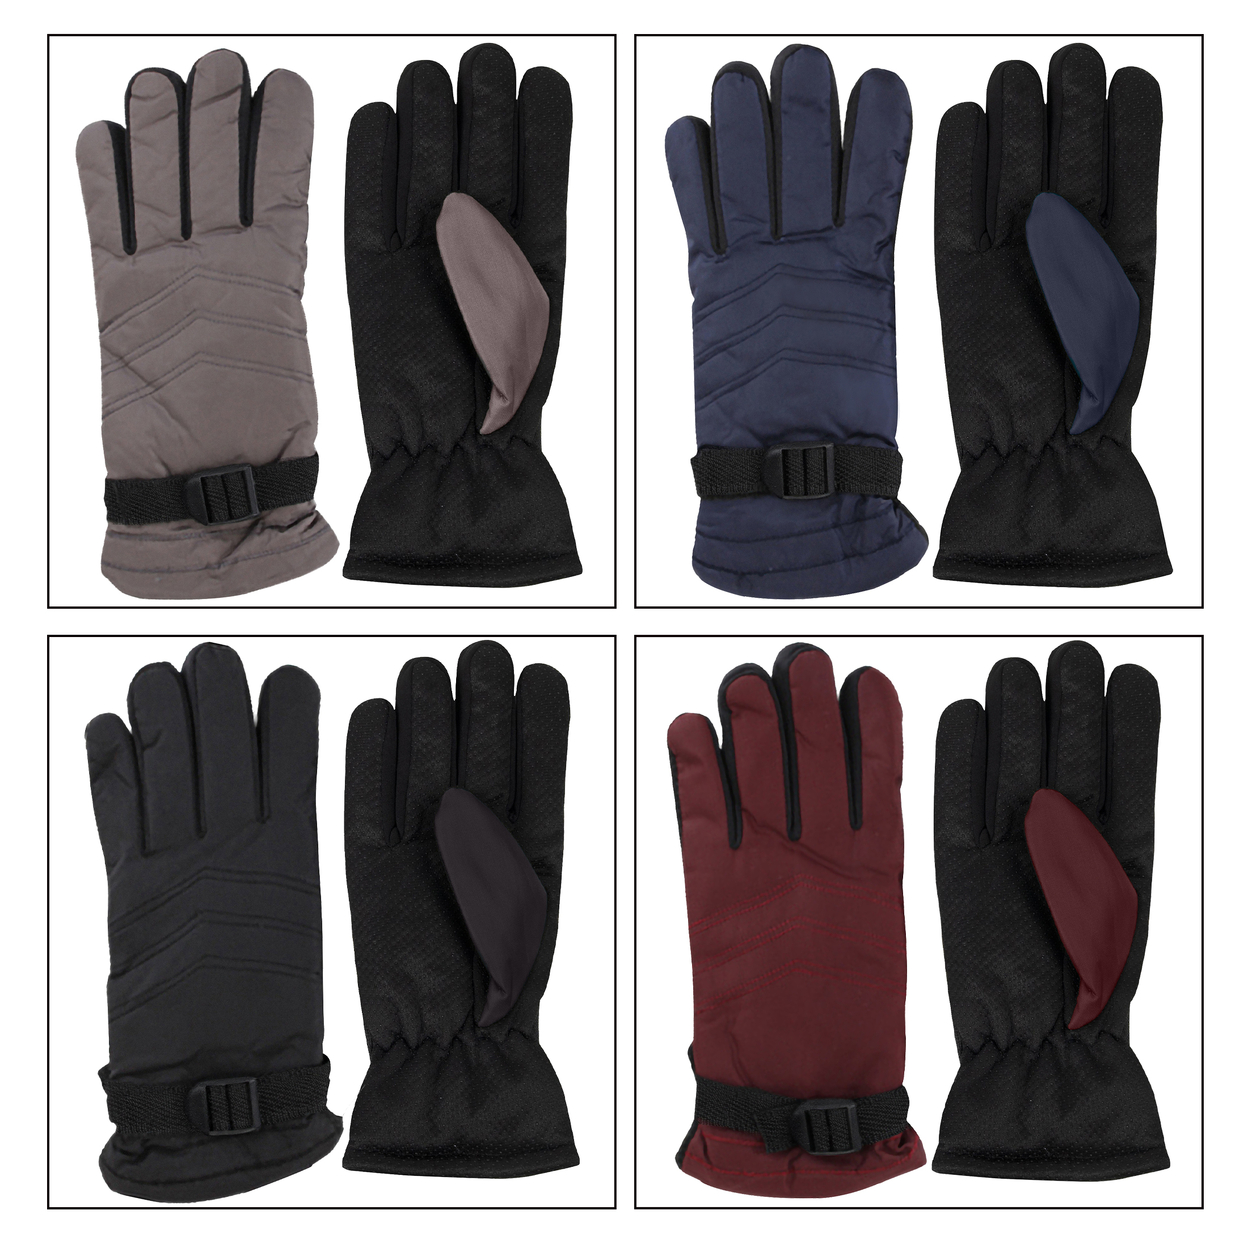 3-Pairs Women's Cozy Fur Lined Snow Ski Warm Winter Gloves - Black/red/blue